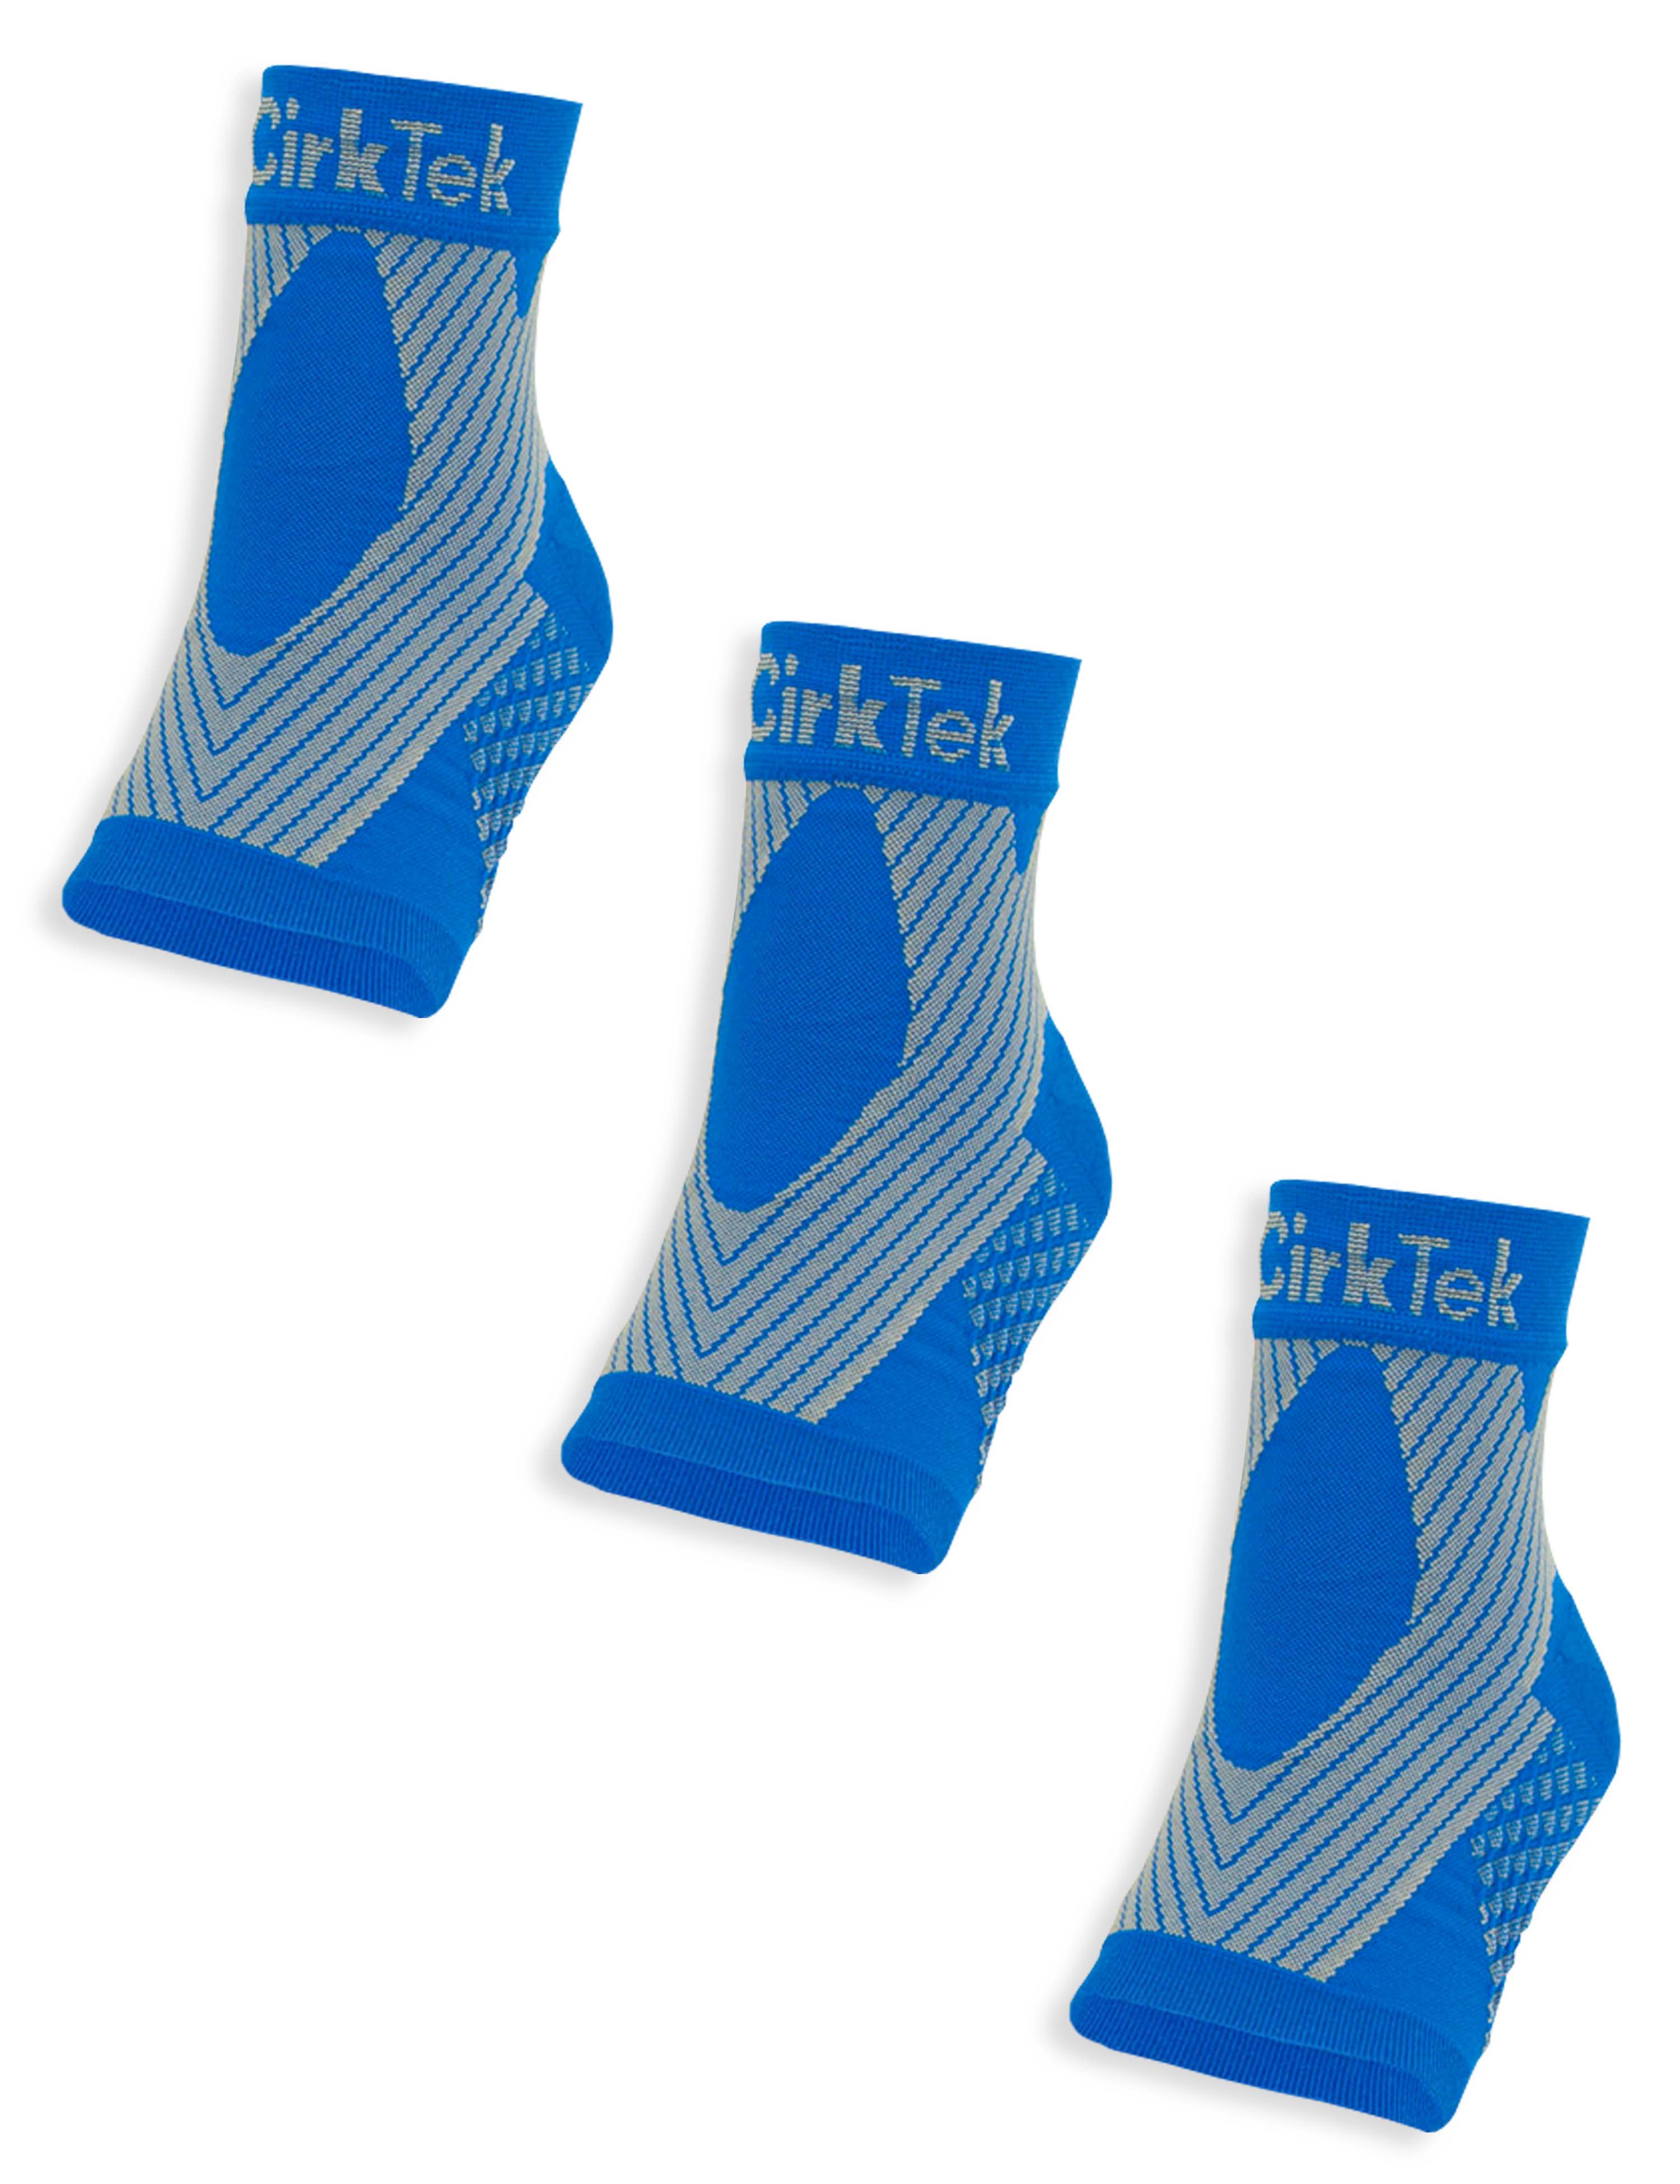 Ankle Sleeve 20-30 mmHg 3PACK - Royal Blue